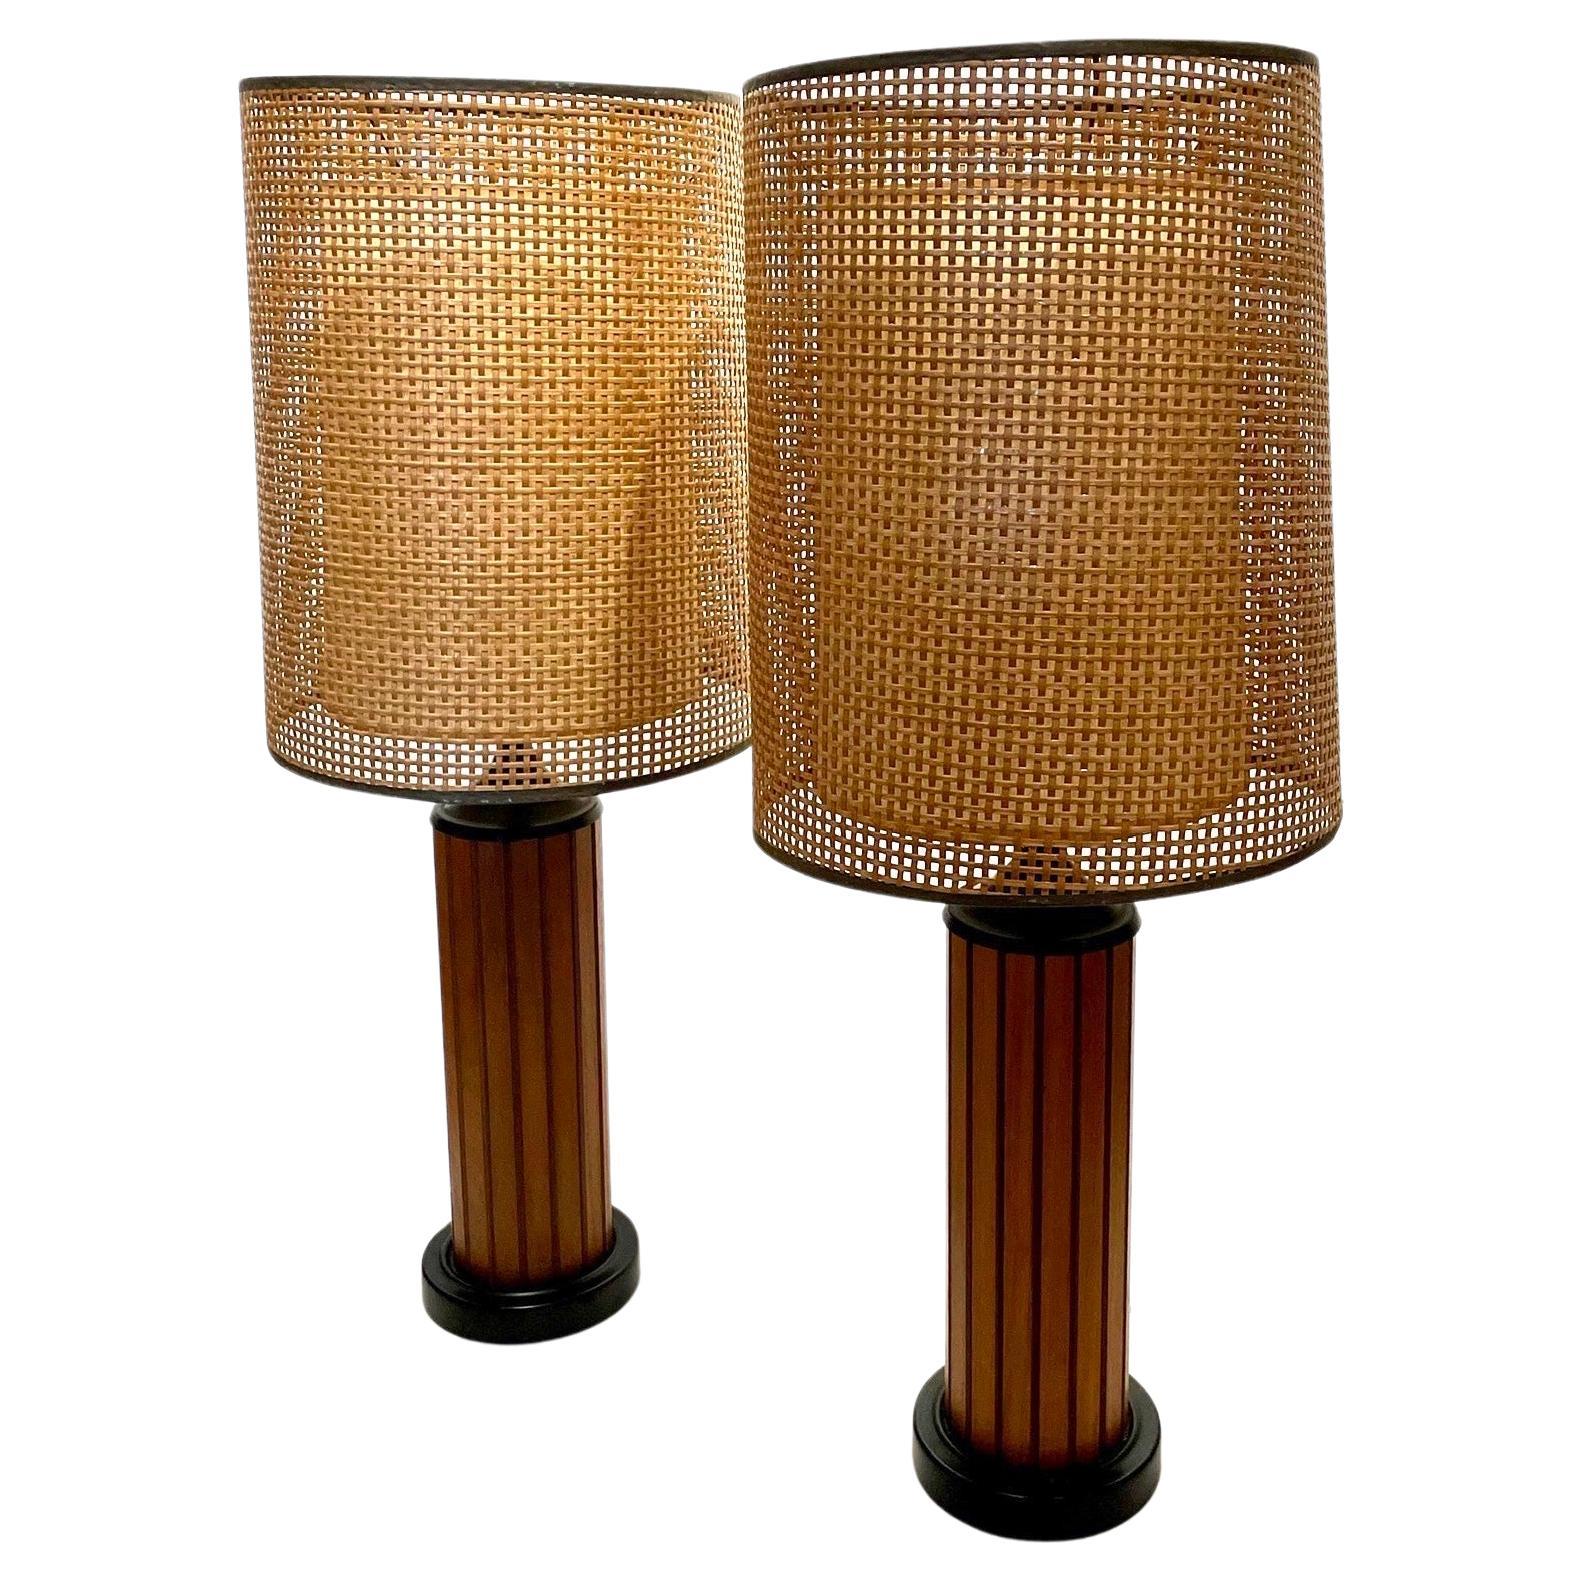 Pair of American Mid-Century Modern Table Lamps in Teak Base Original Lampshades